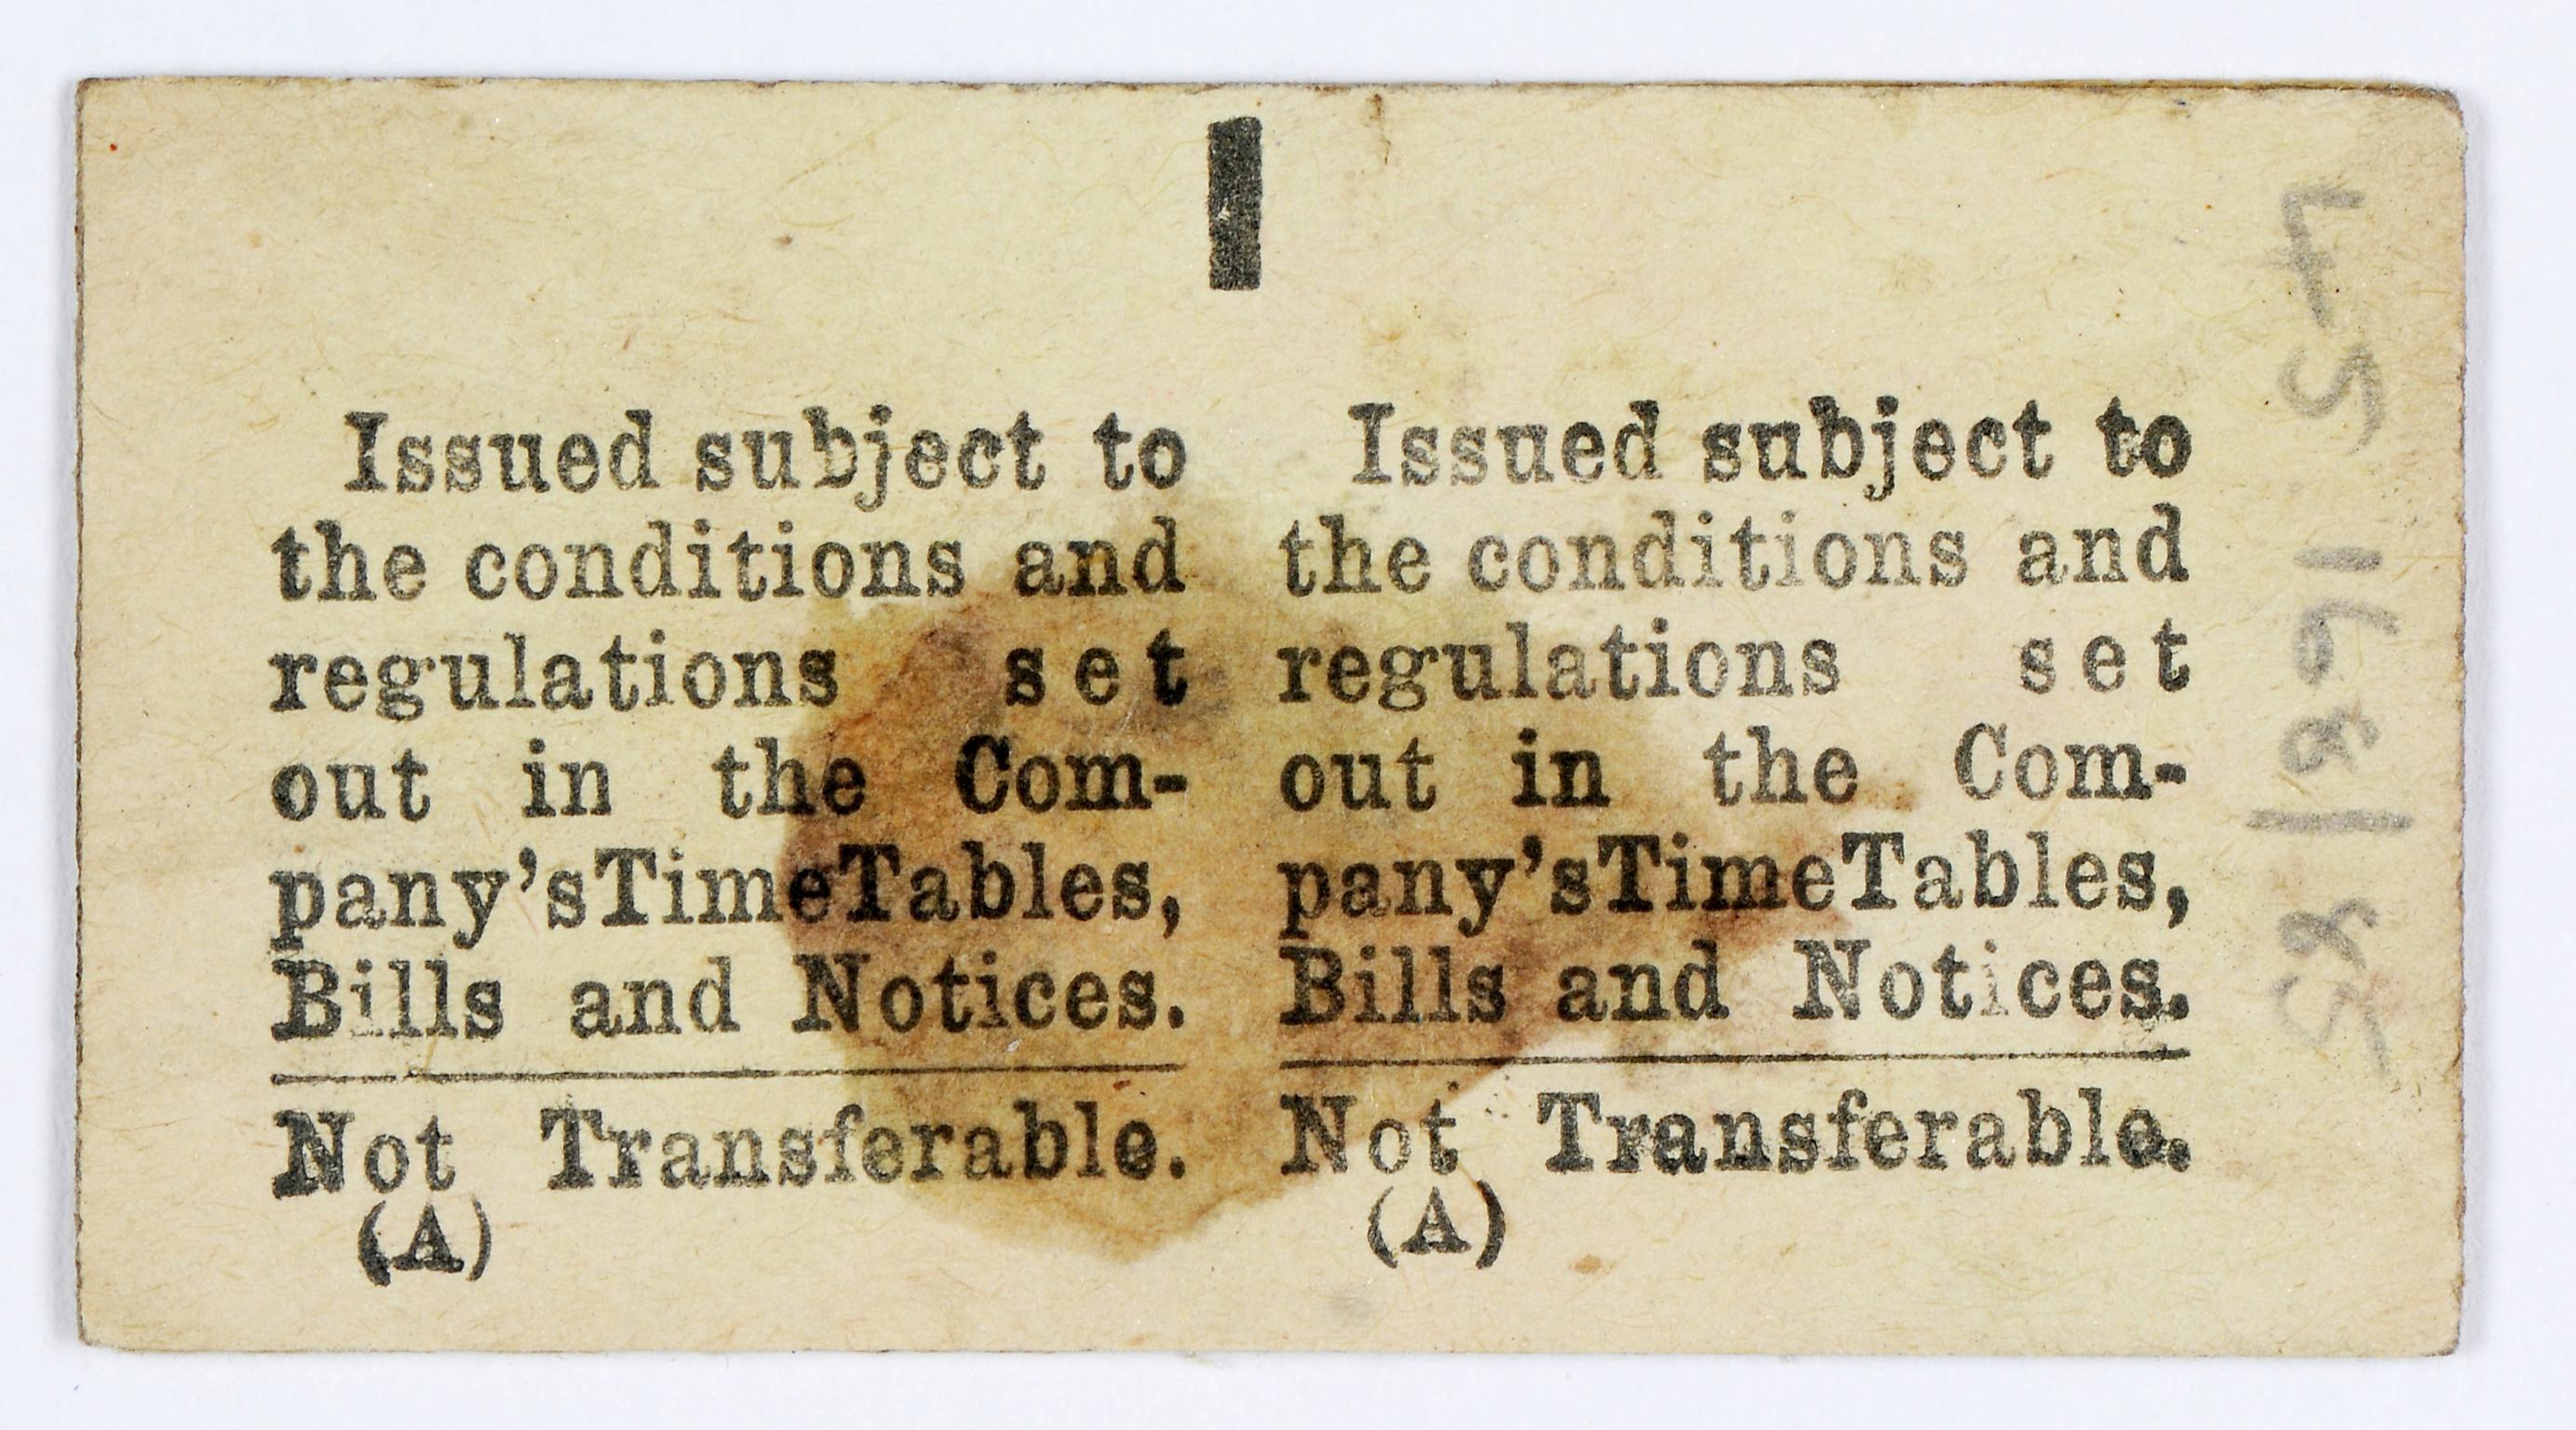 Port Talbot Railway & Docks Co., ticket